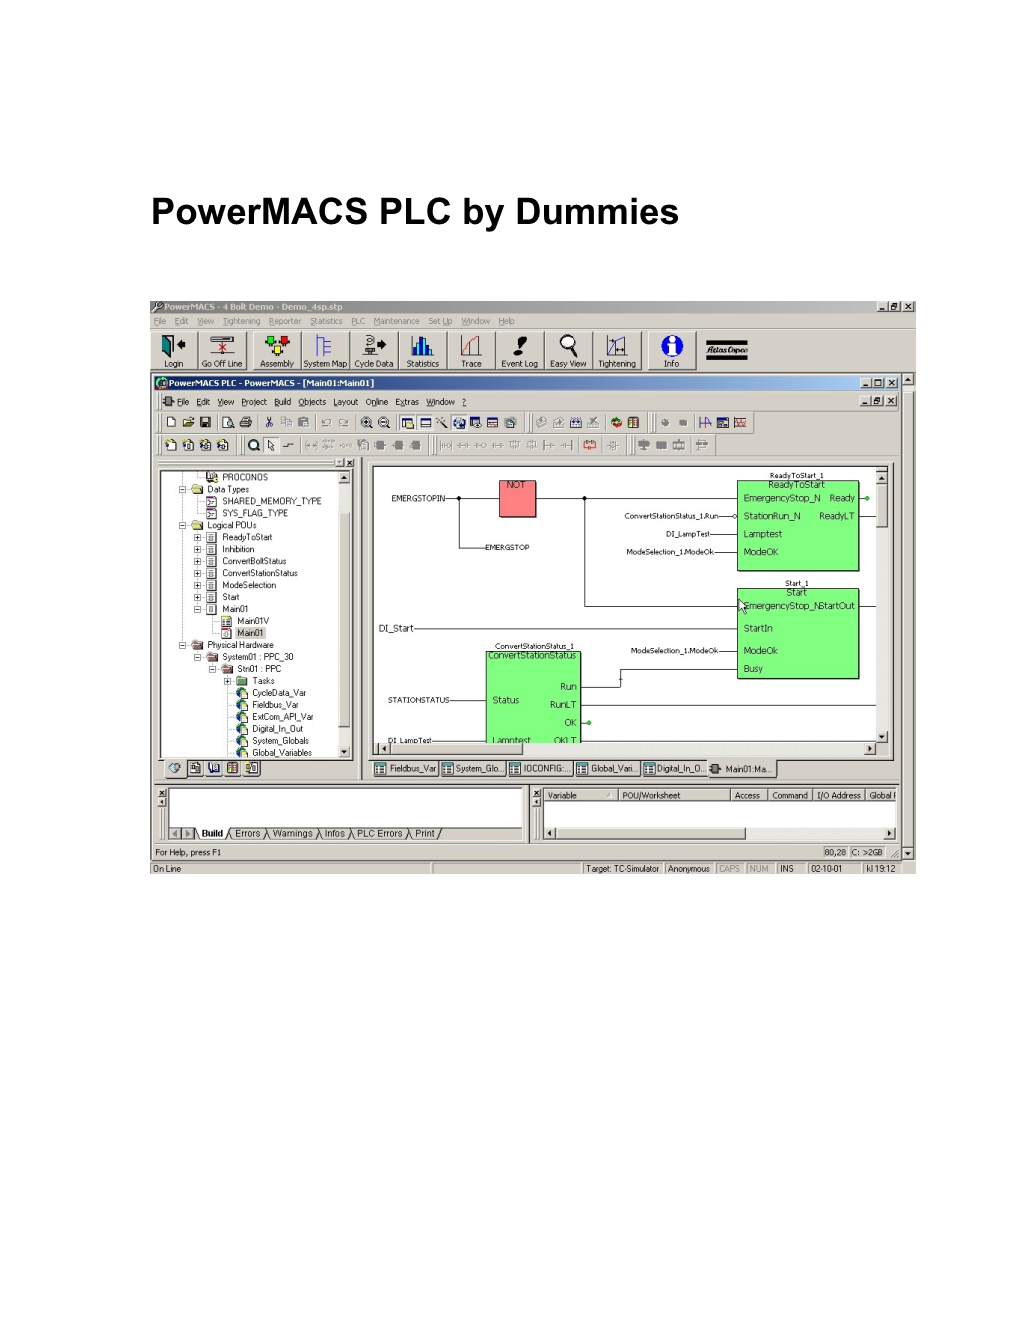 Powermacs PLC by Dummies